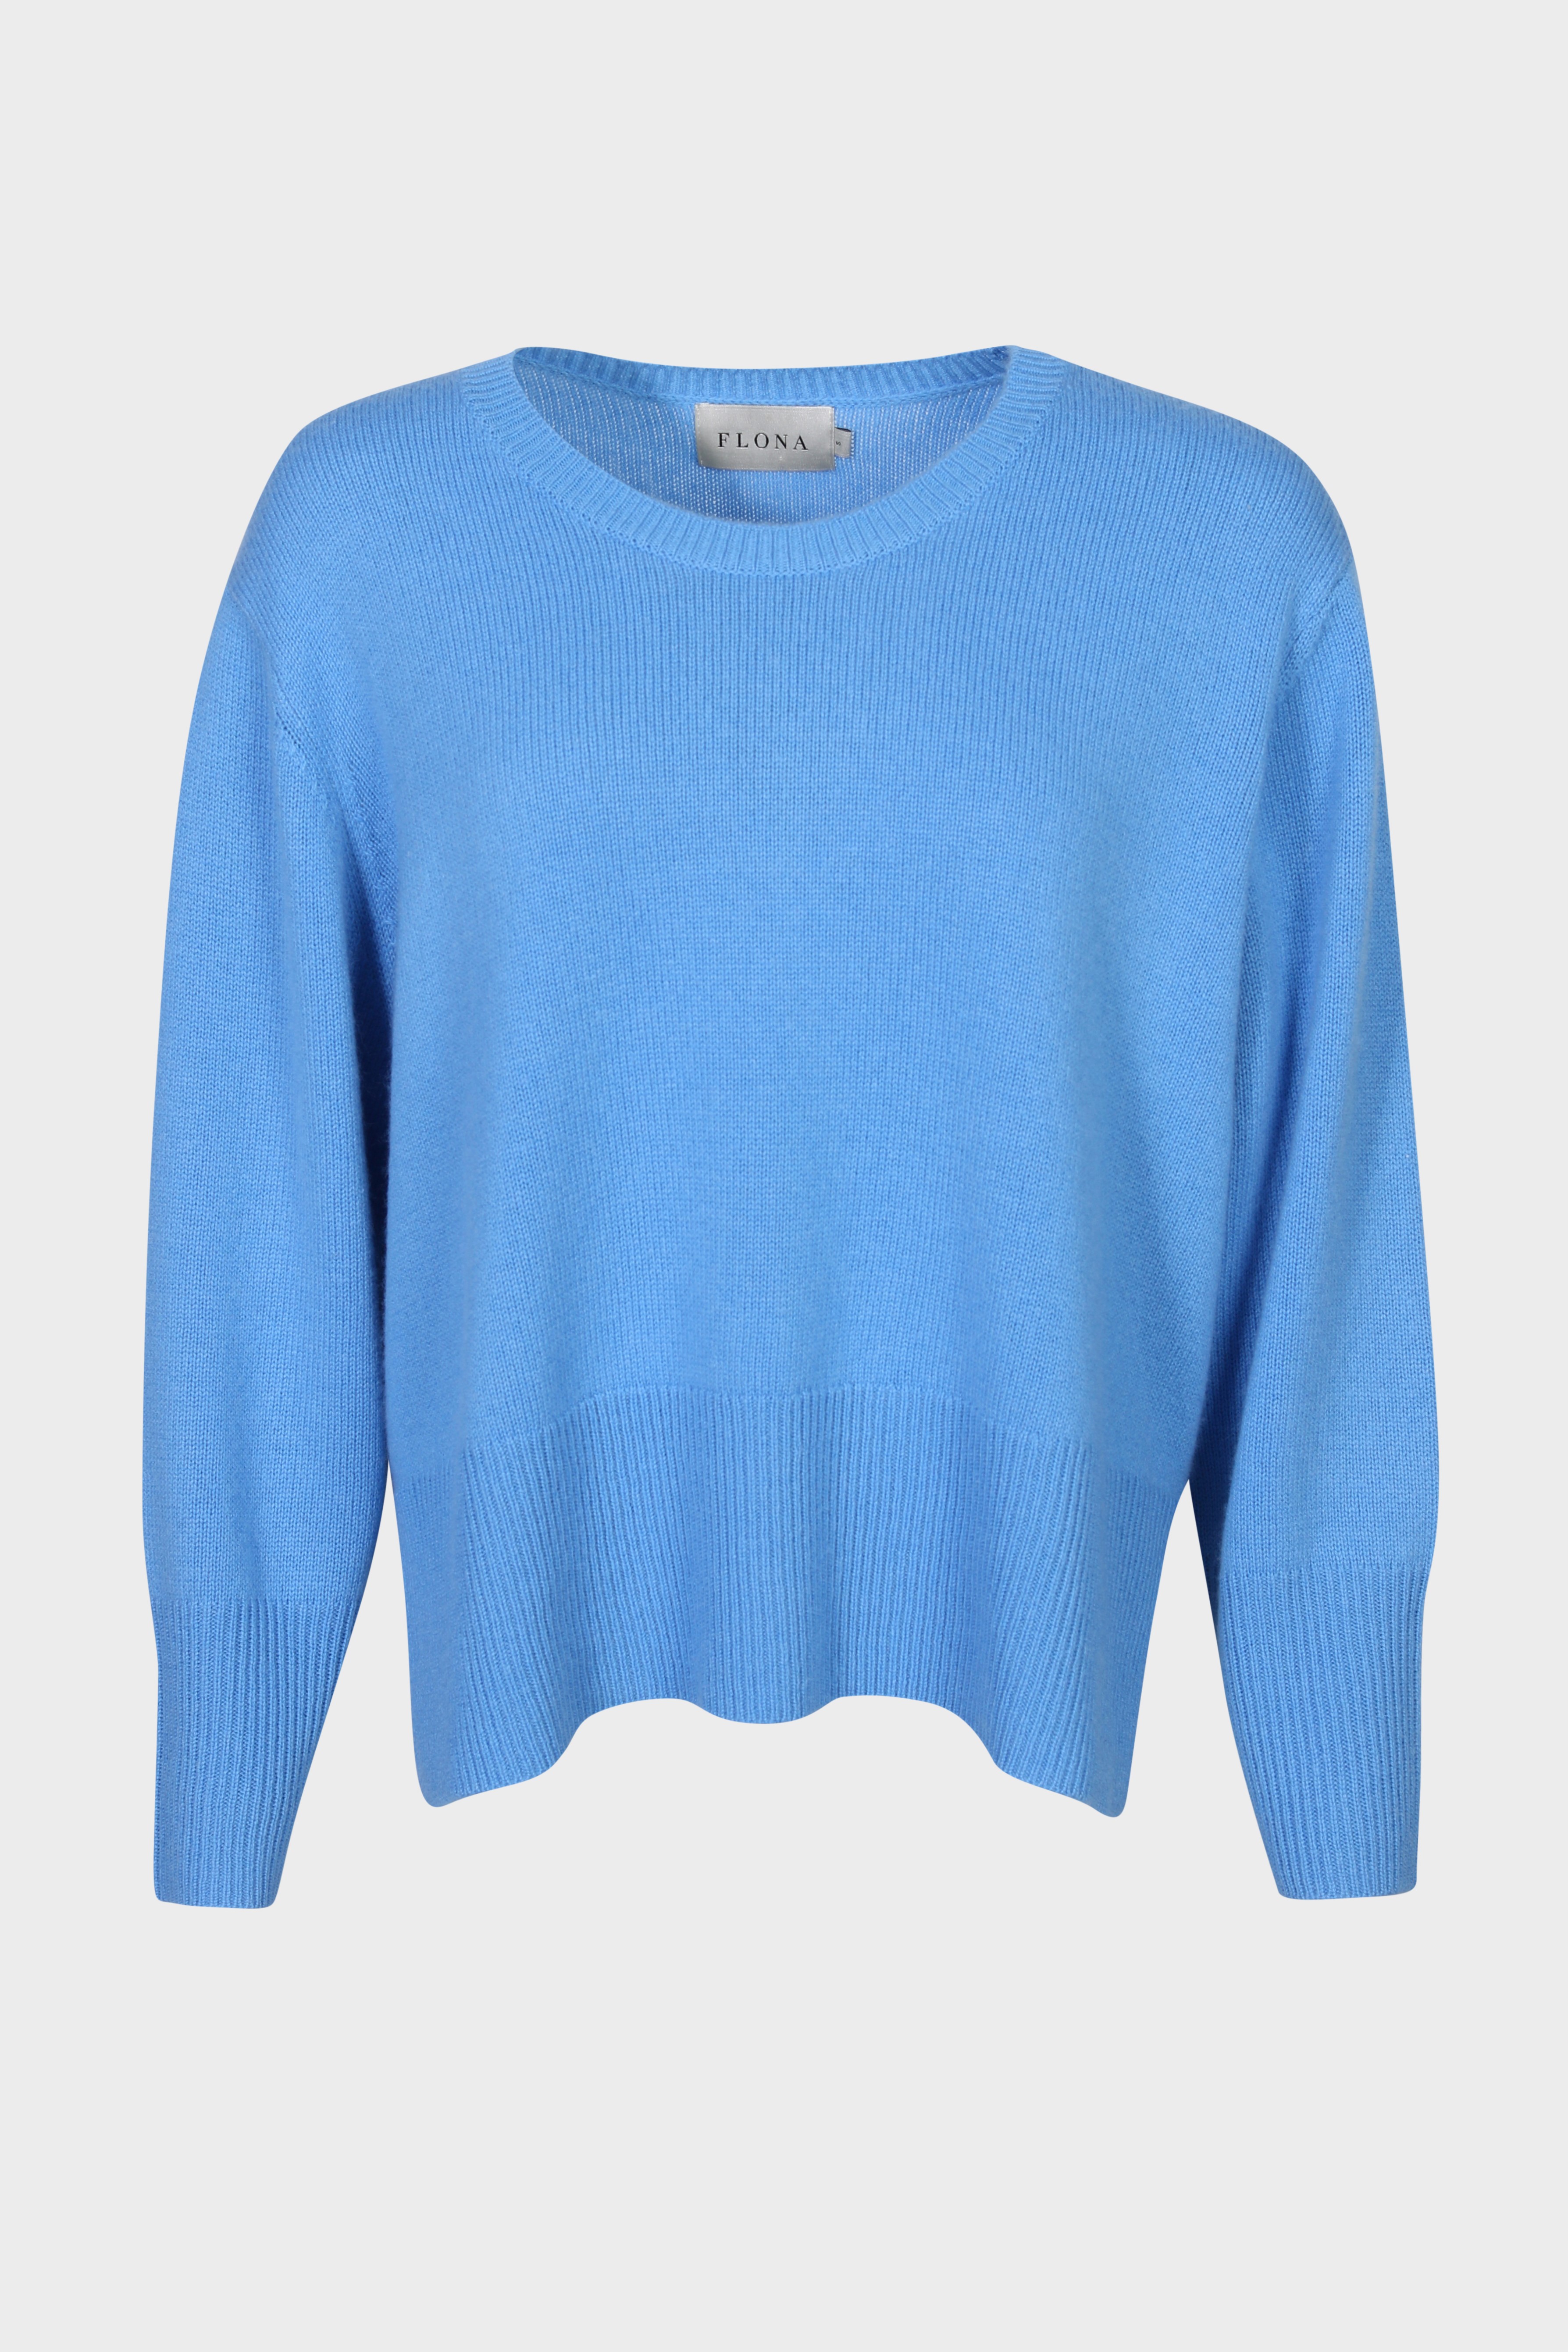 FLONA Cashmere Sweater in Azur M